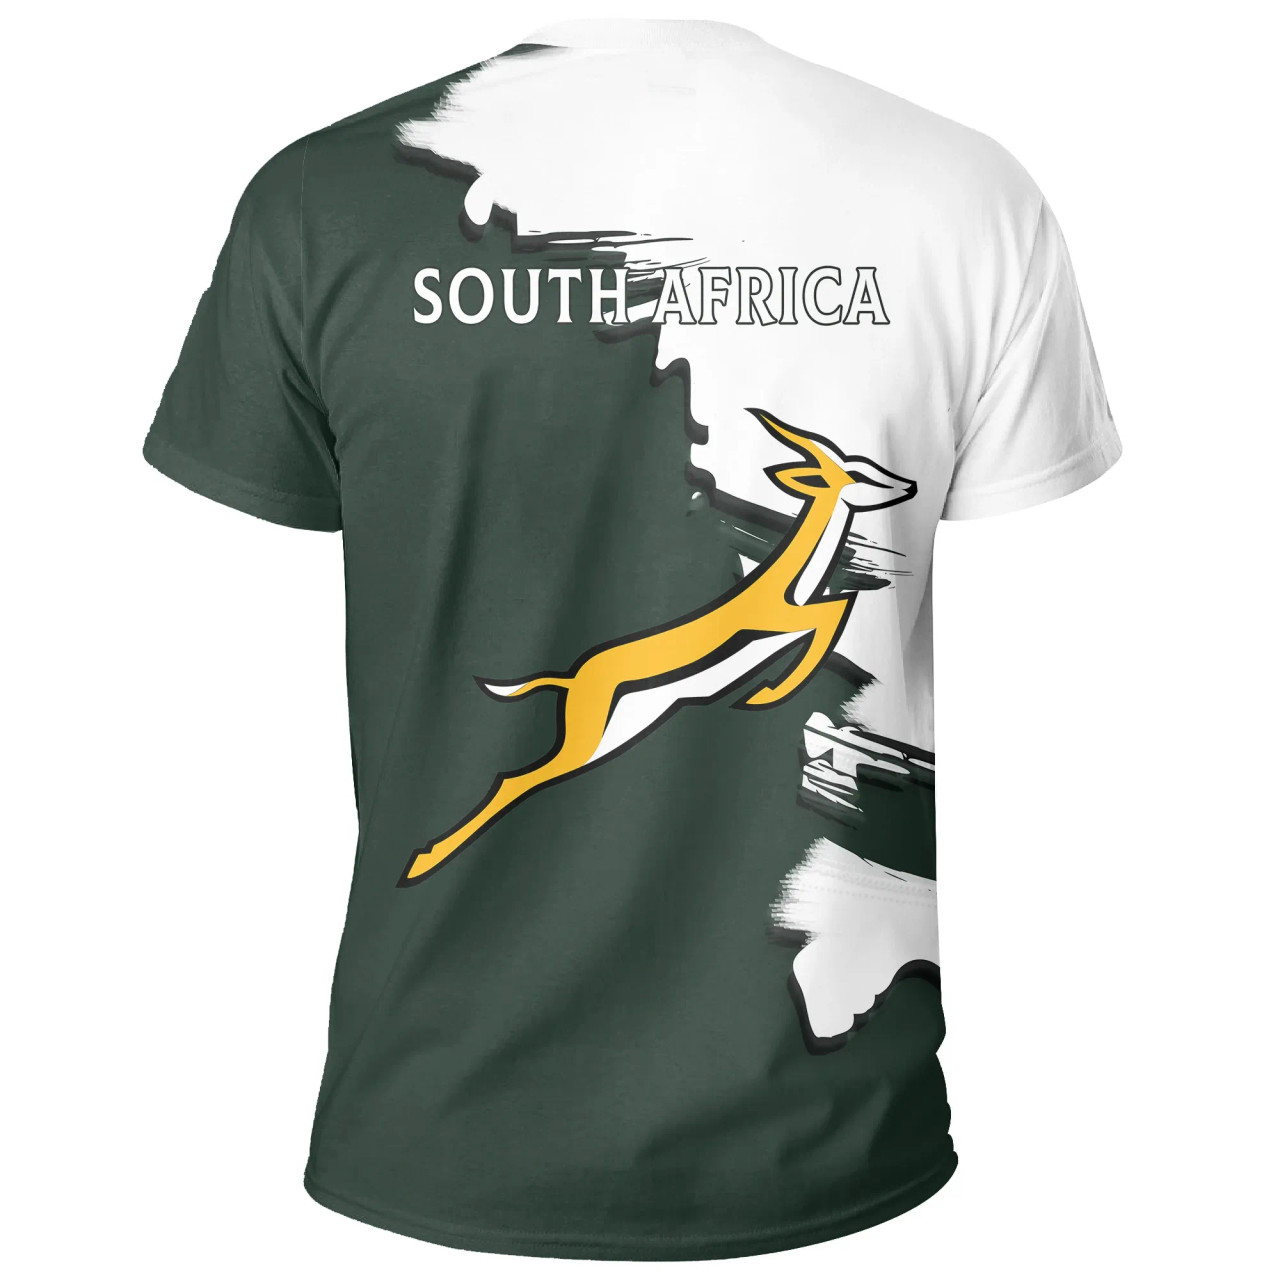 South Africa T-Shirt - Africa Scratch Style T-Shirt Desert Fashion 2